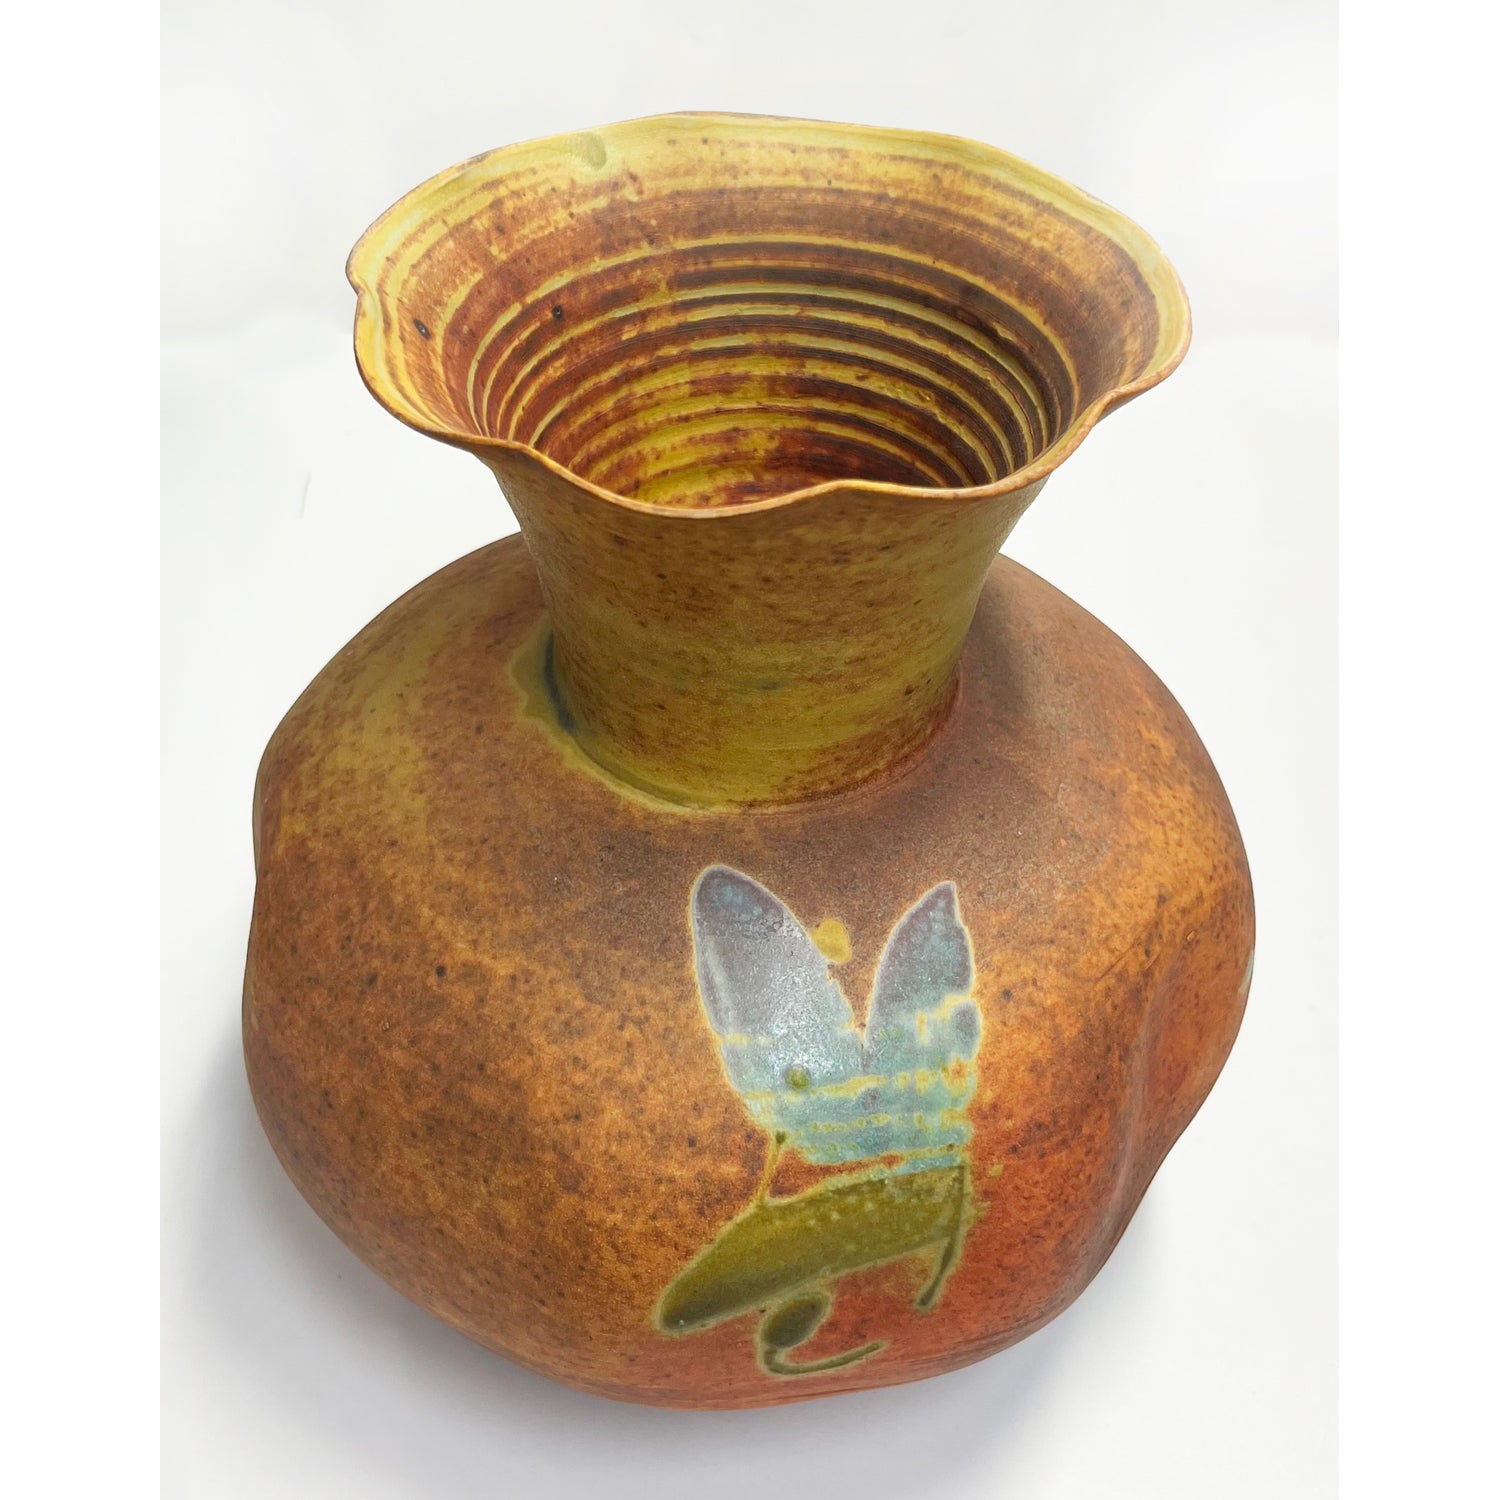 Kayo O'Young - Ochre Vase, 9.5" x 8" x 8"